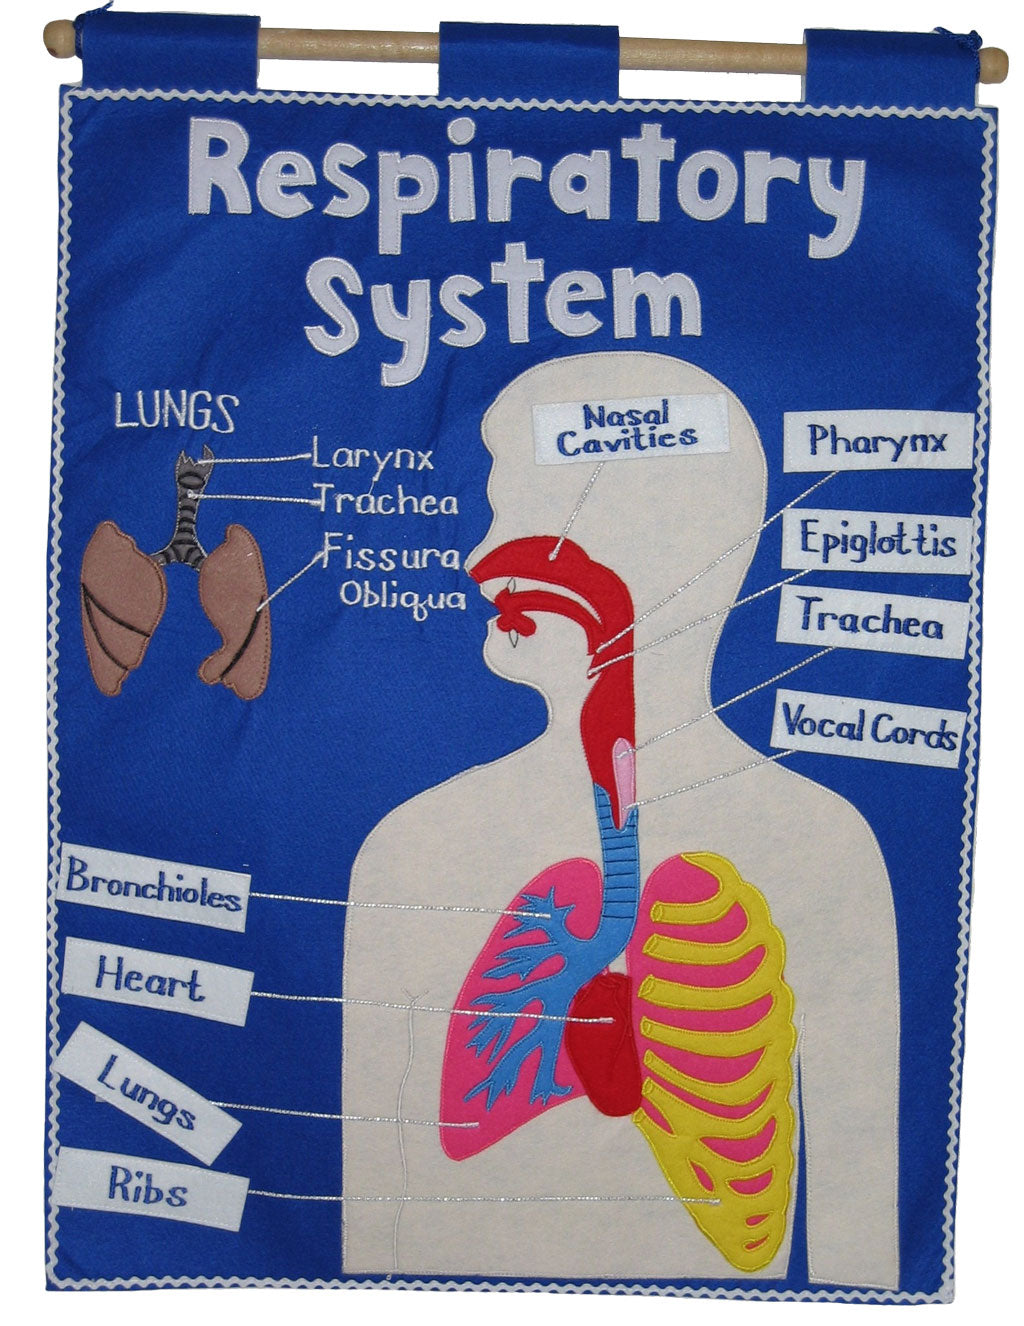 Respiratory System - Fabric Wall Chart